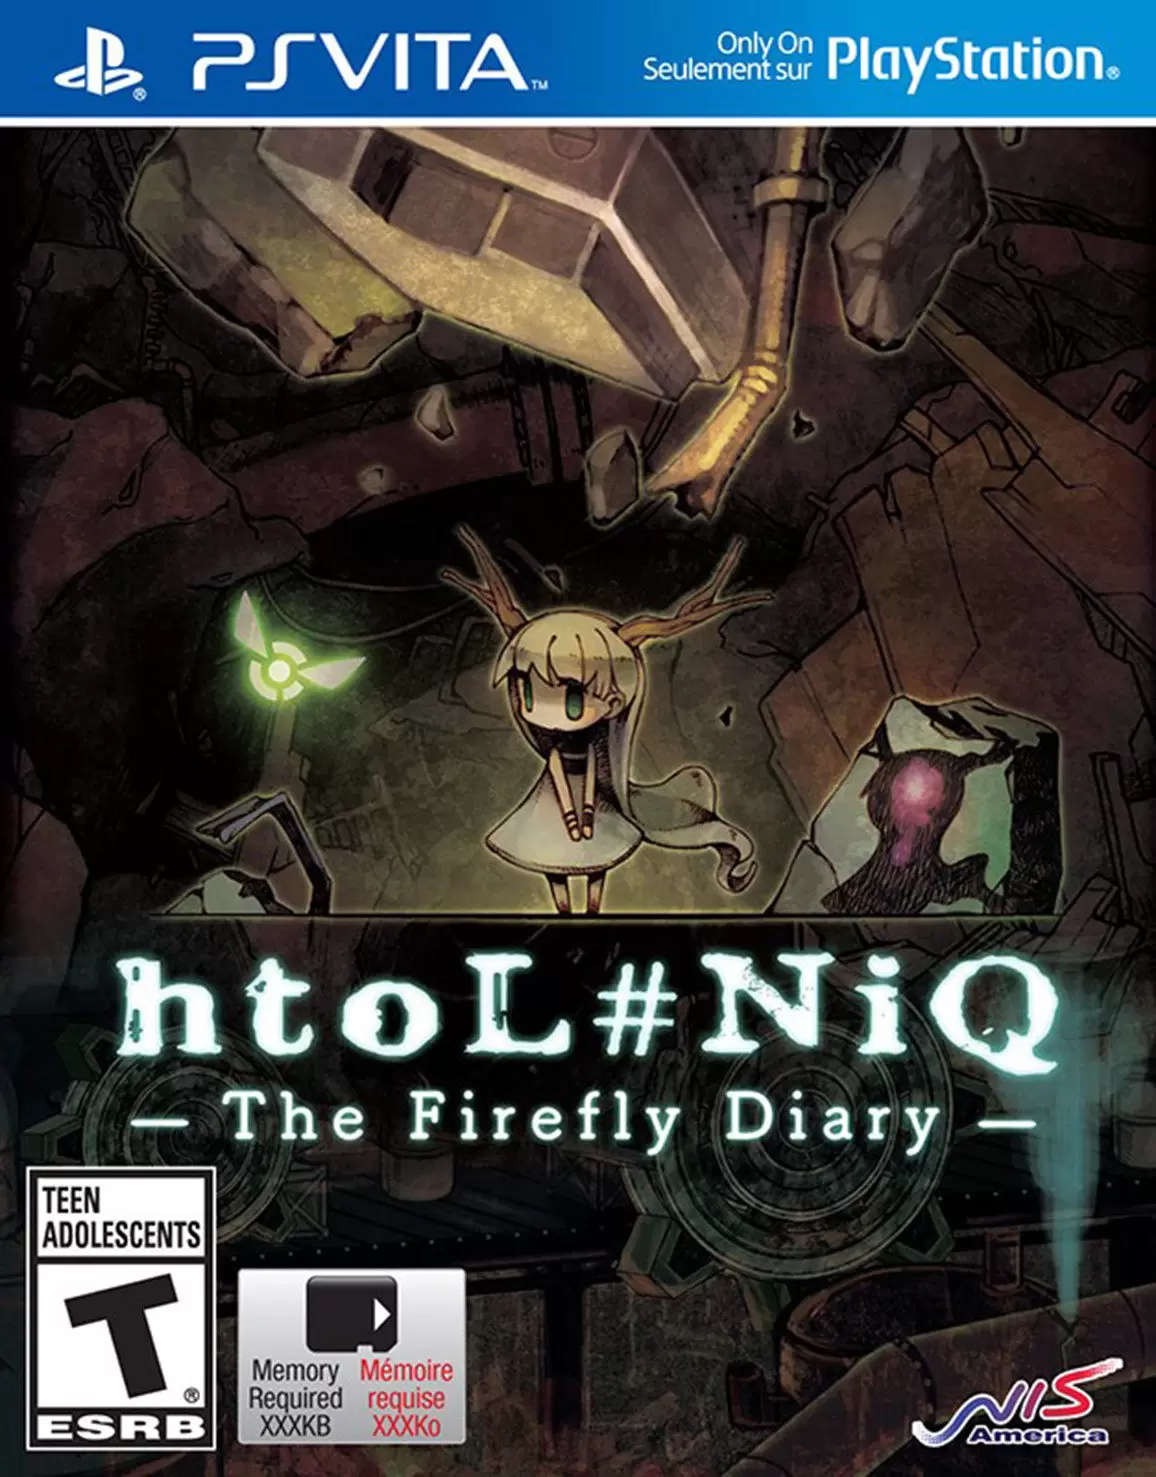 PS Vita Games - hToL#NiQ: The Firefly Diary